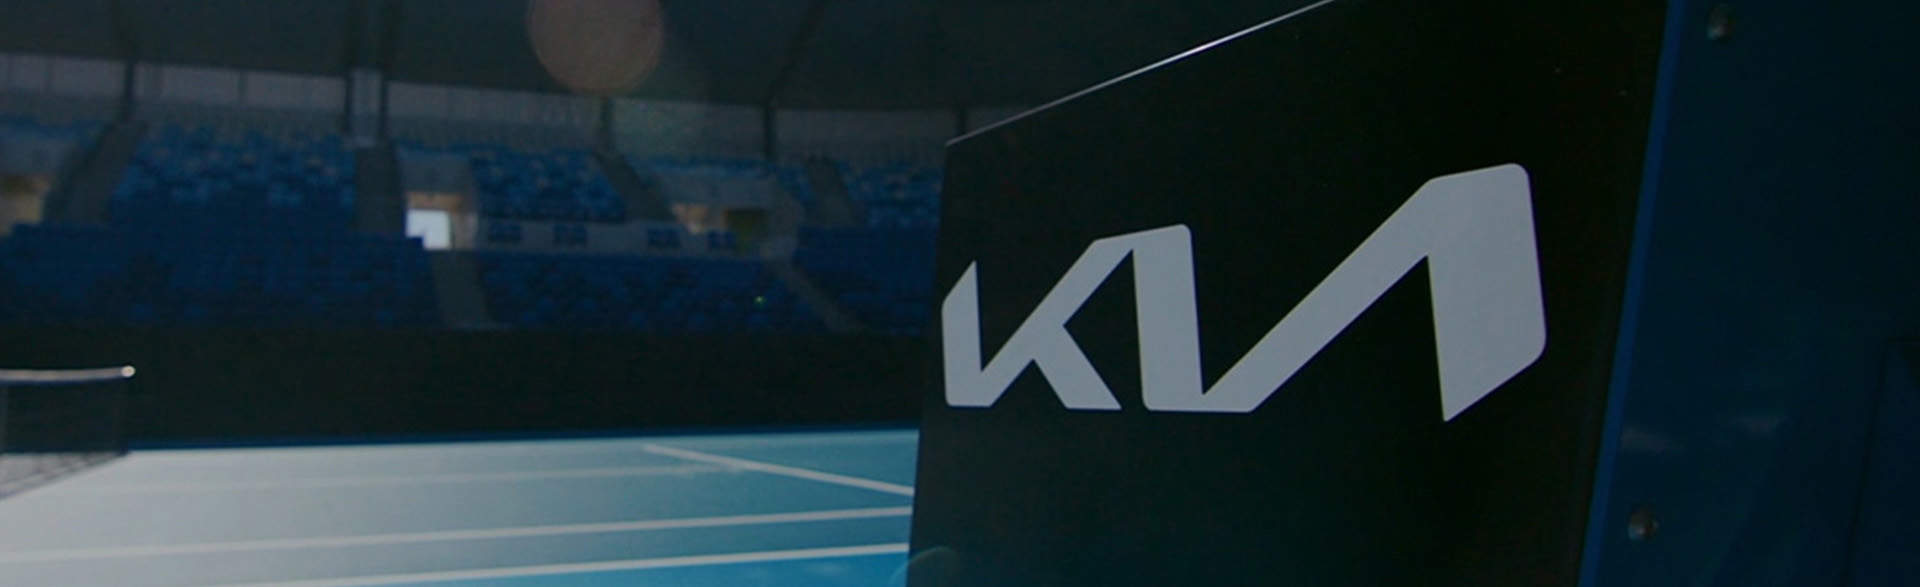 Kia, Major Partner of Australian Open